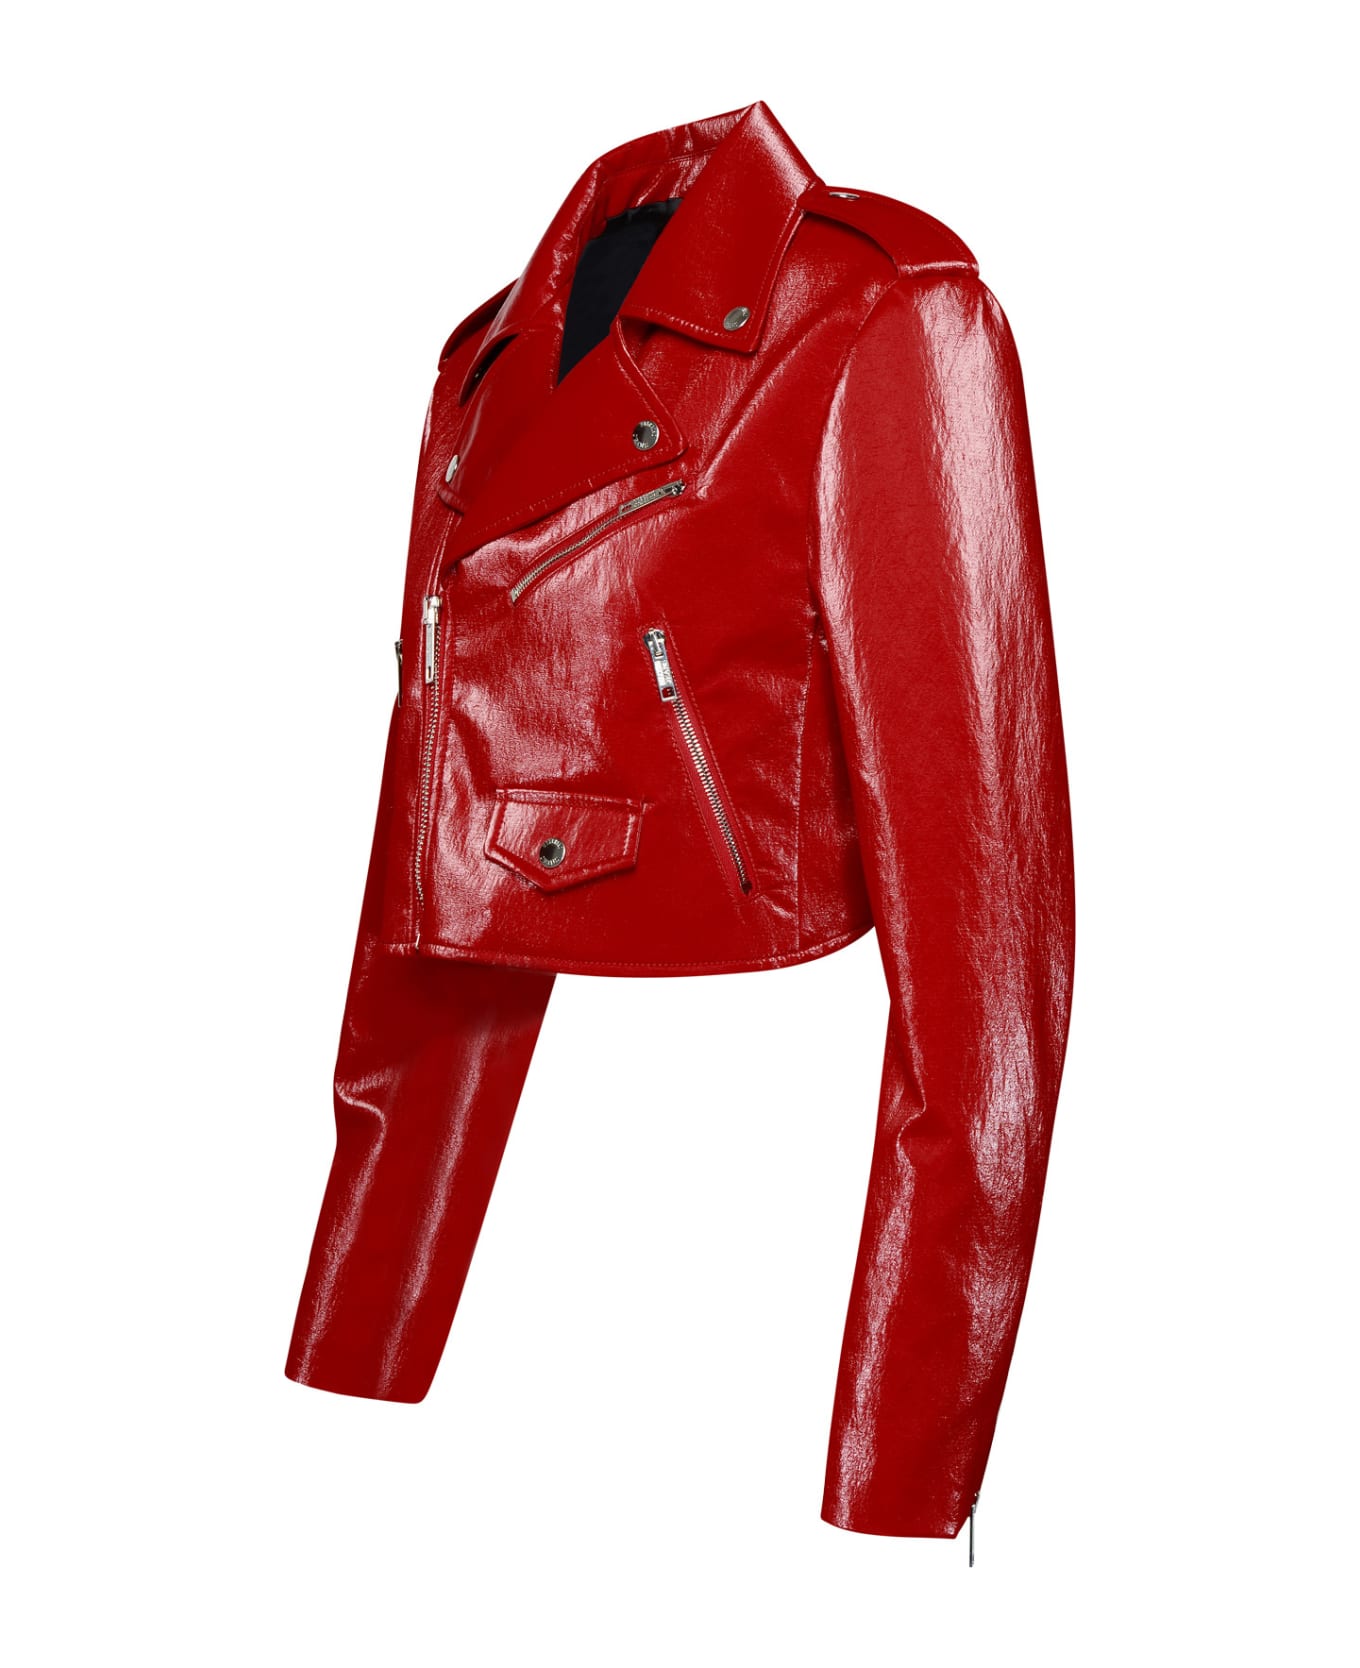 M05CH1N0 Jeans Red APLIKACJ Blend Biker Jacket - Red